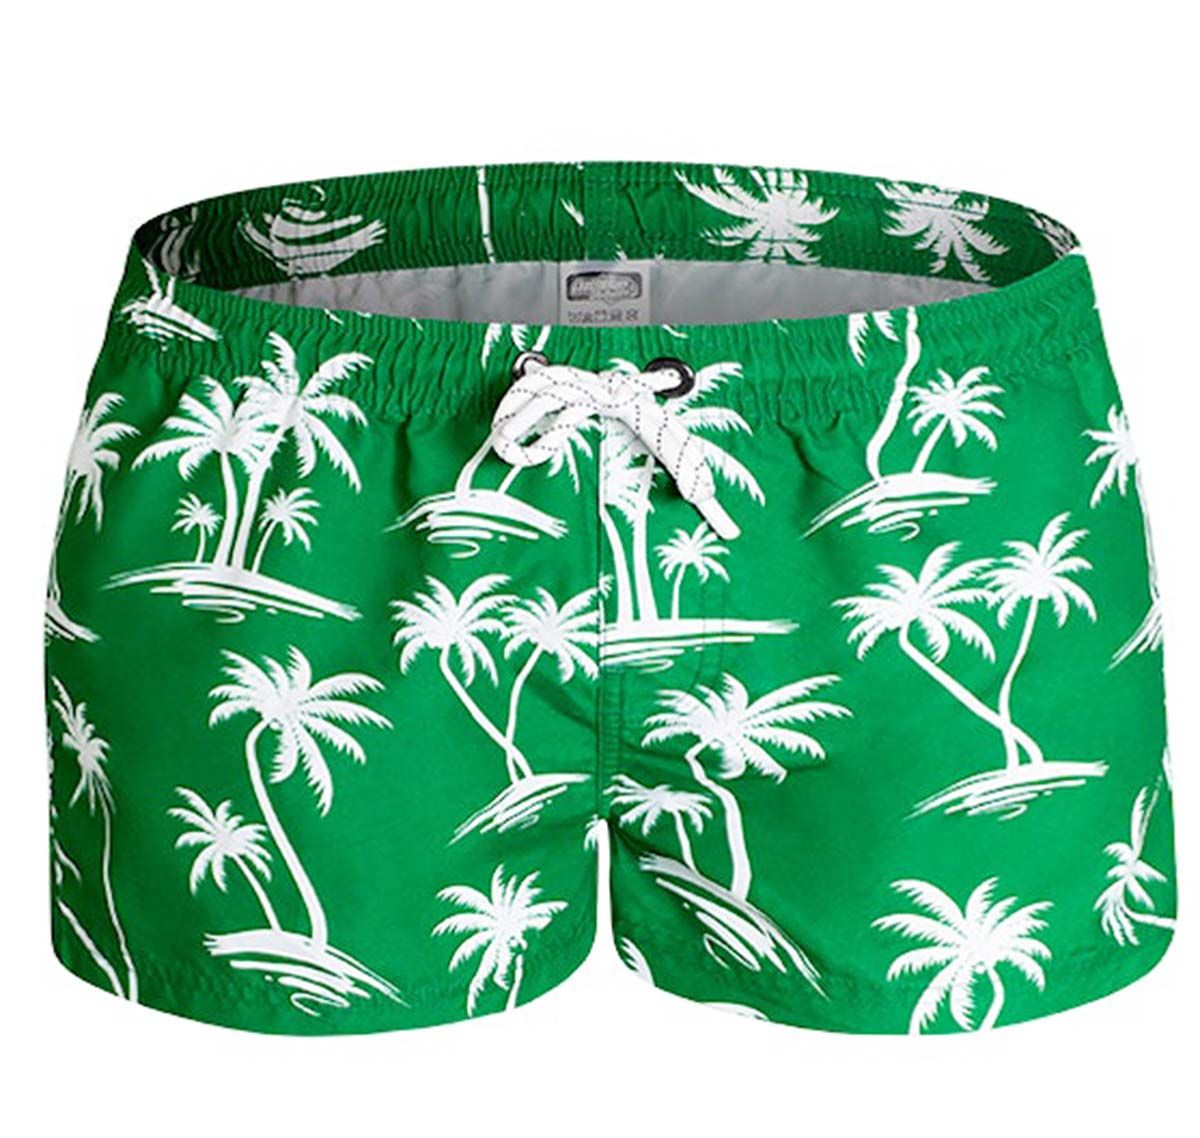 aussieBum swim shorts TROPICANA GREEN Shorts, green